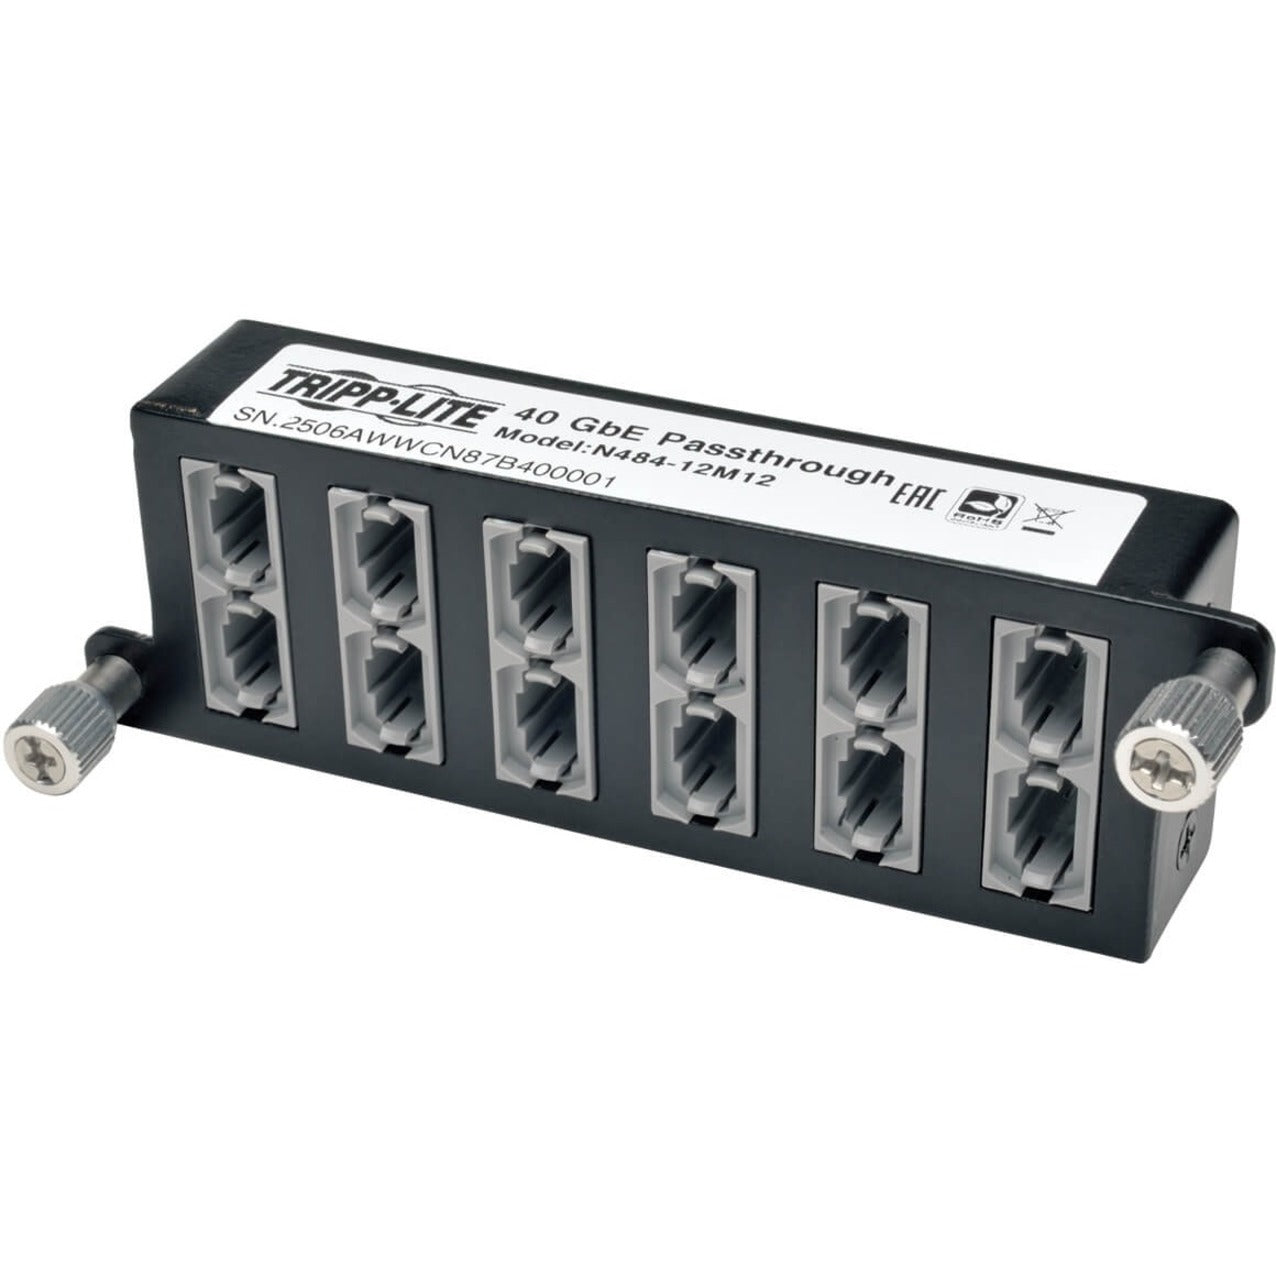 Tripp Lite N484-12M12 40Gb Pass-Through Cassette - (x12) 12-Fiber MTP/MPO, Network Patch Panel